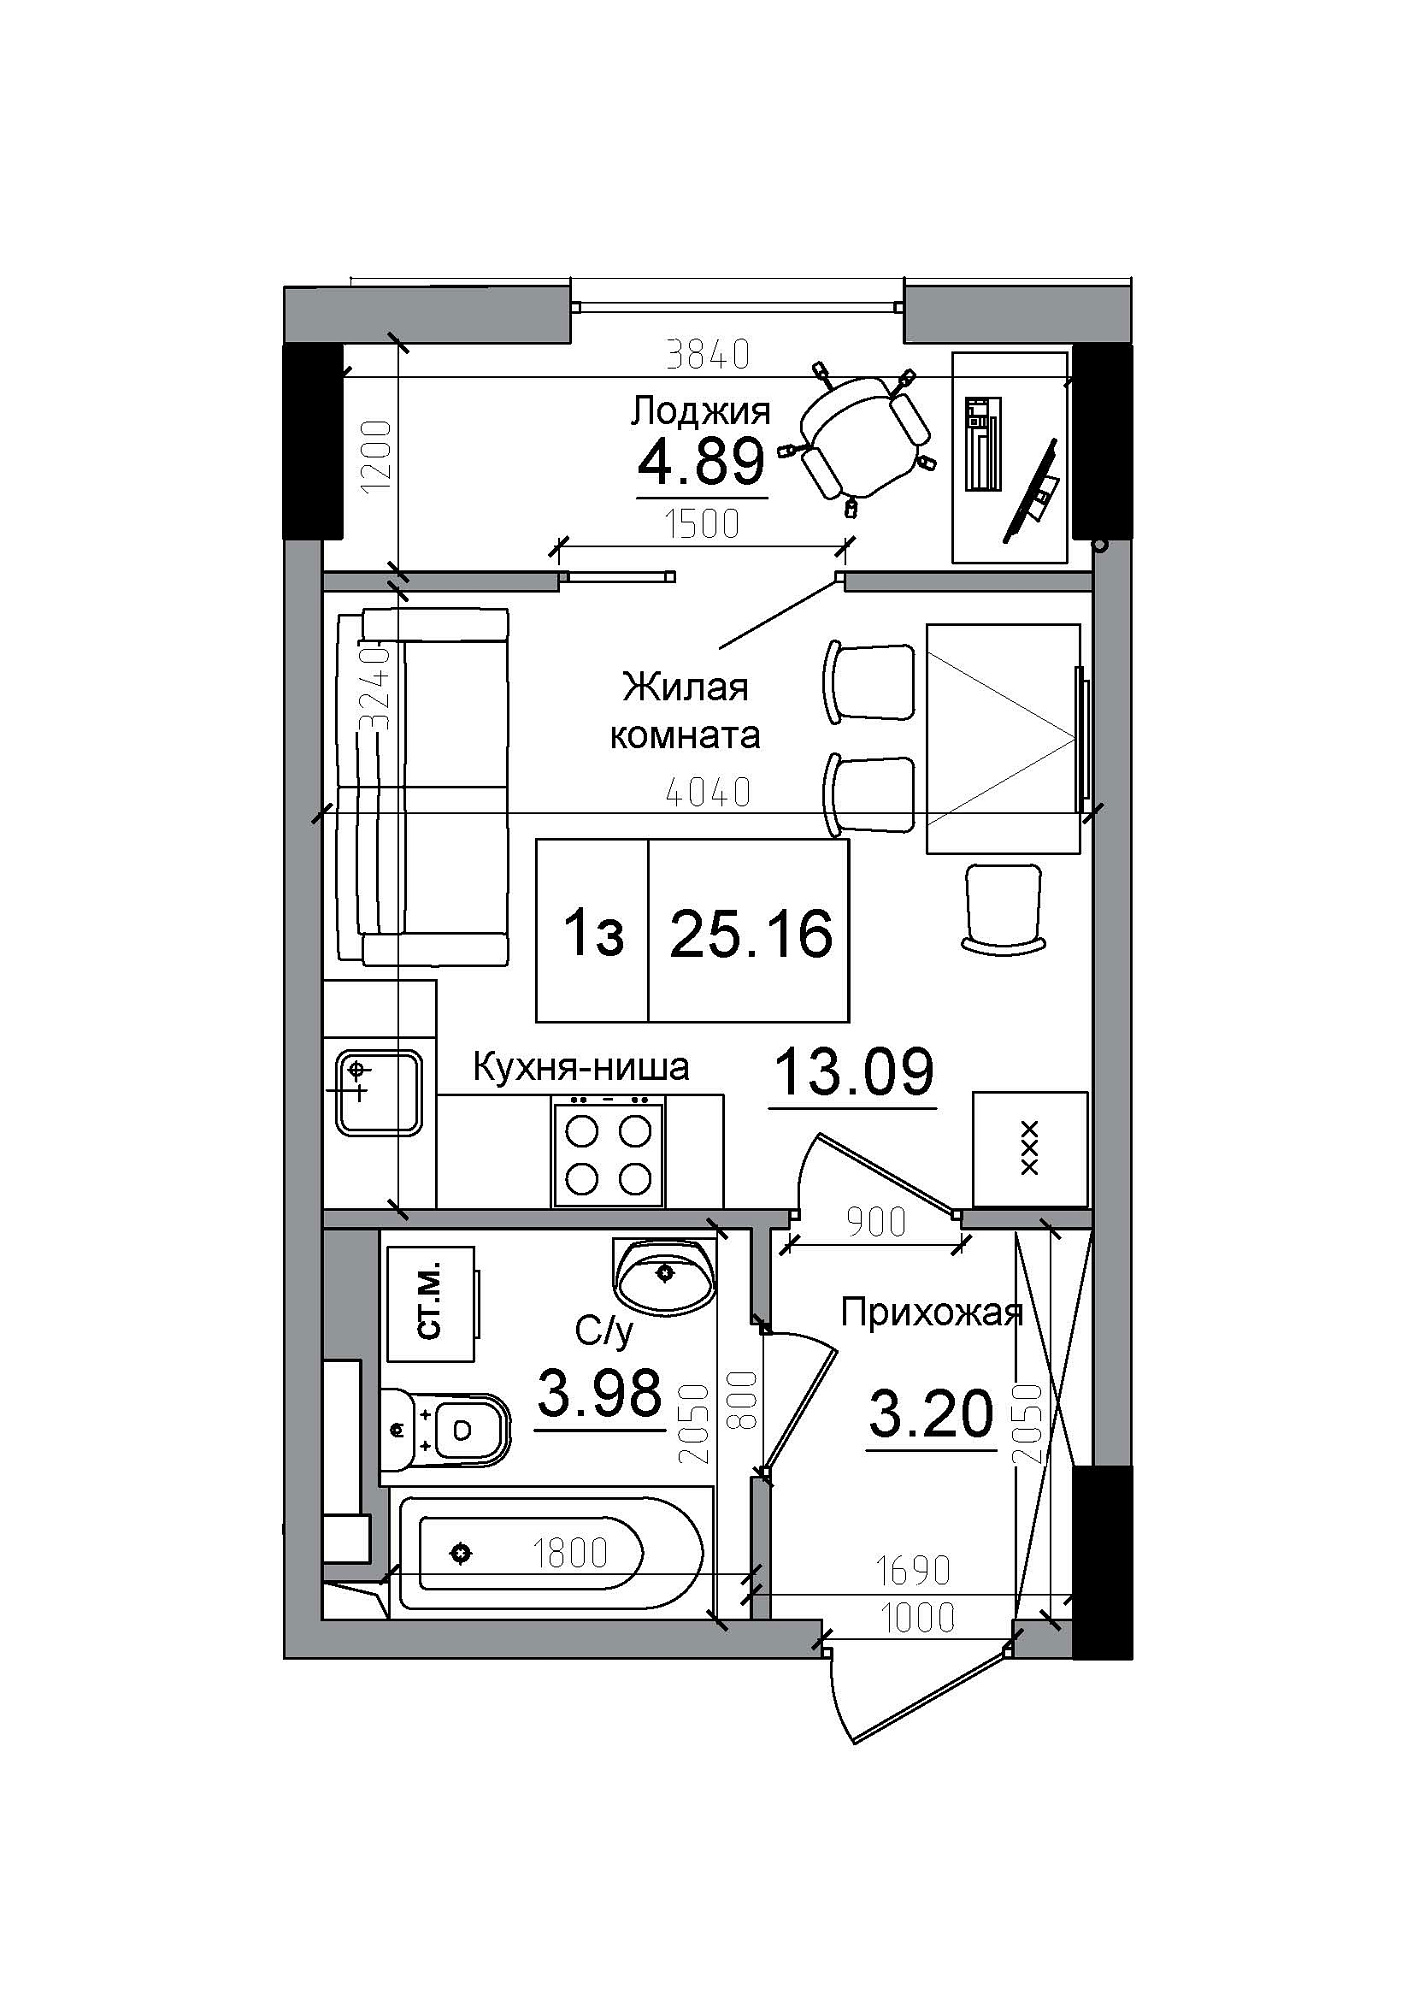 Planning Smart flats area 25.16m2, AB-12-03/00009.